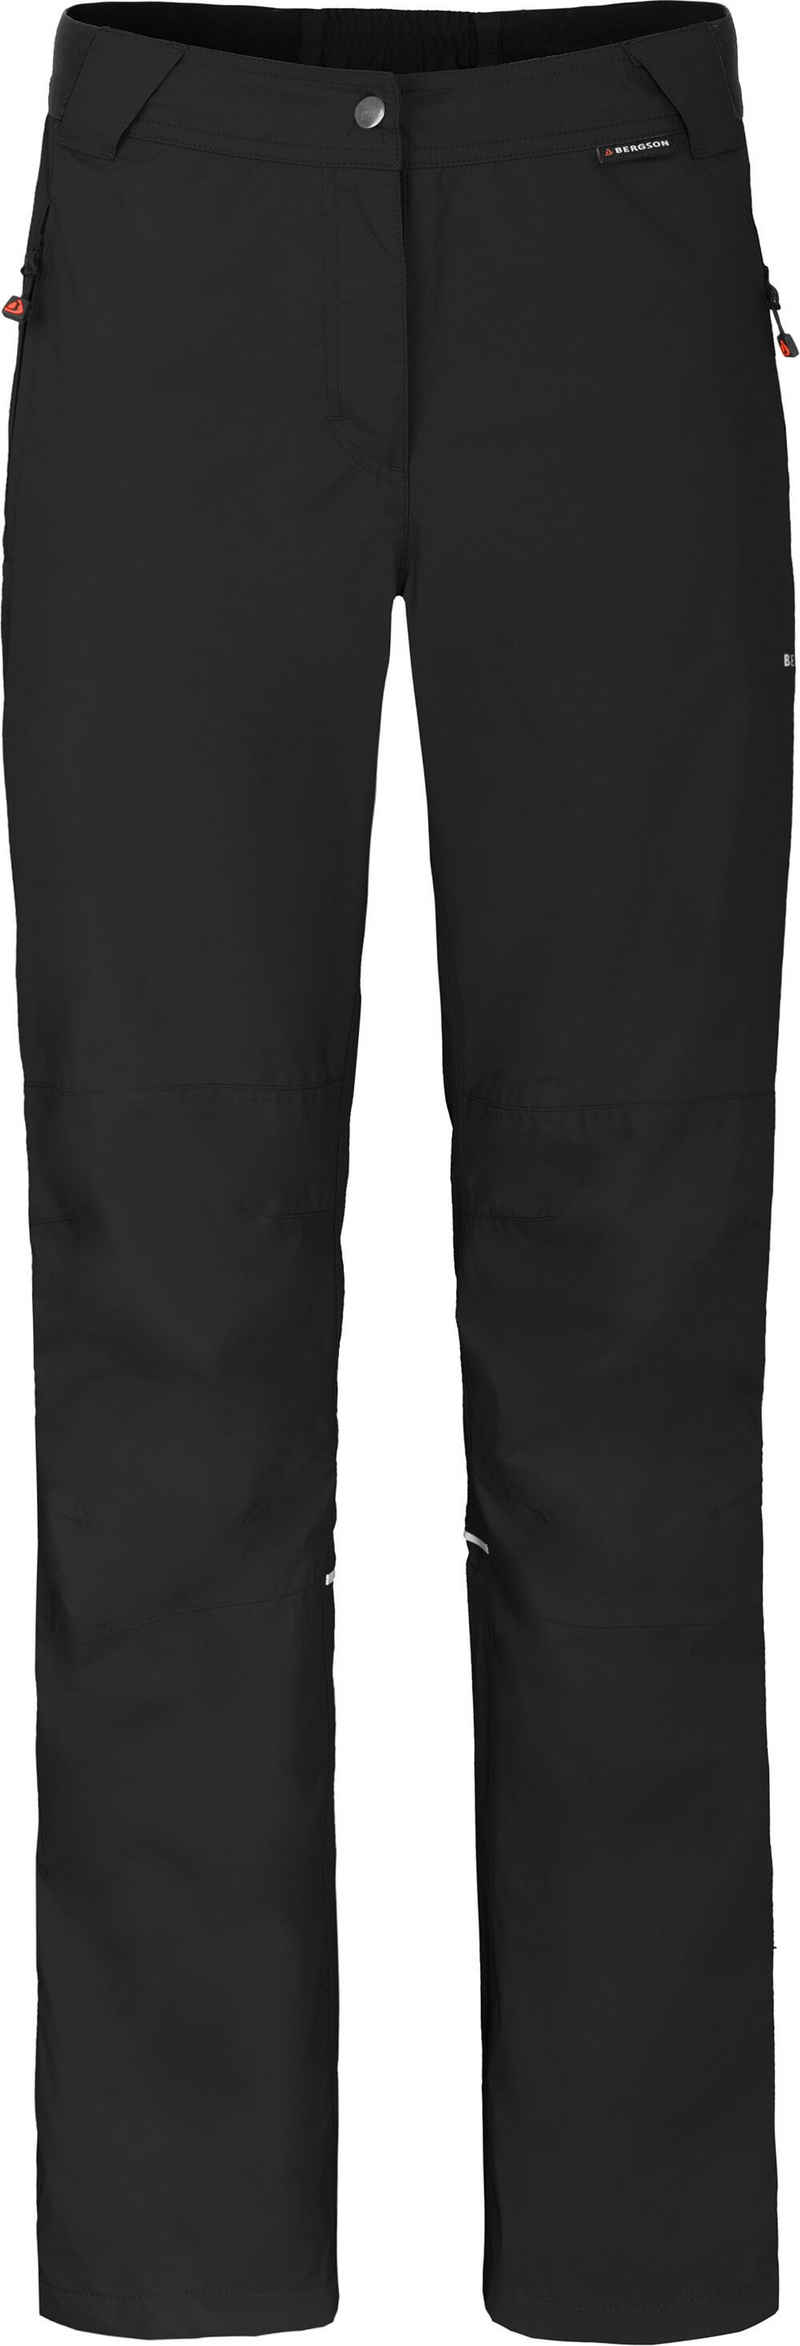 Bergson Regenhose LYNDE COMFORT Damen Regenhose, Netzfutter, 12000 mm Wassersäule, Короткие размеры, schwarz